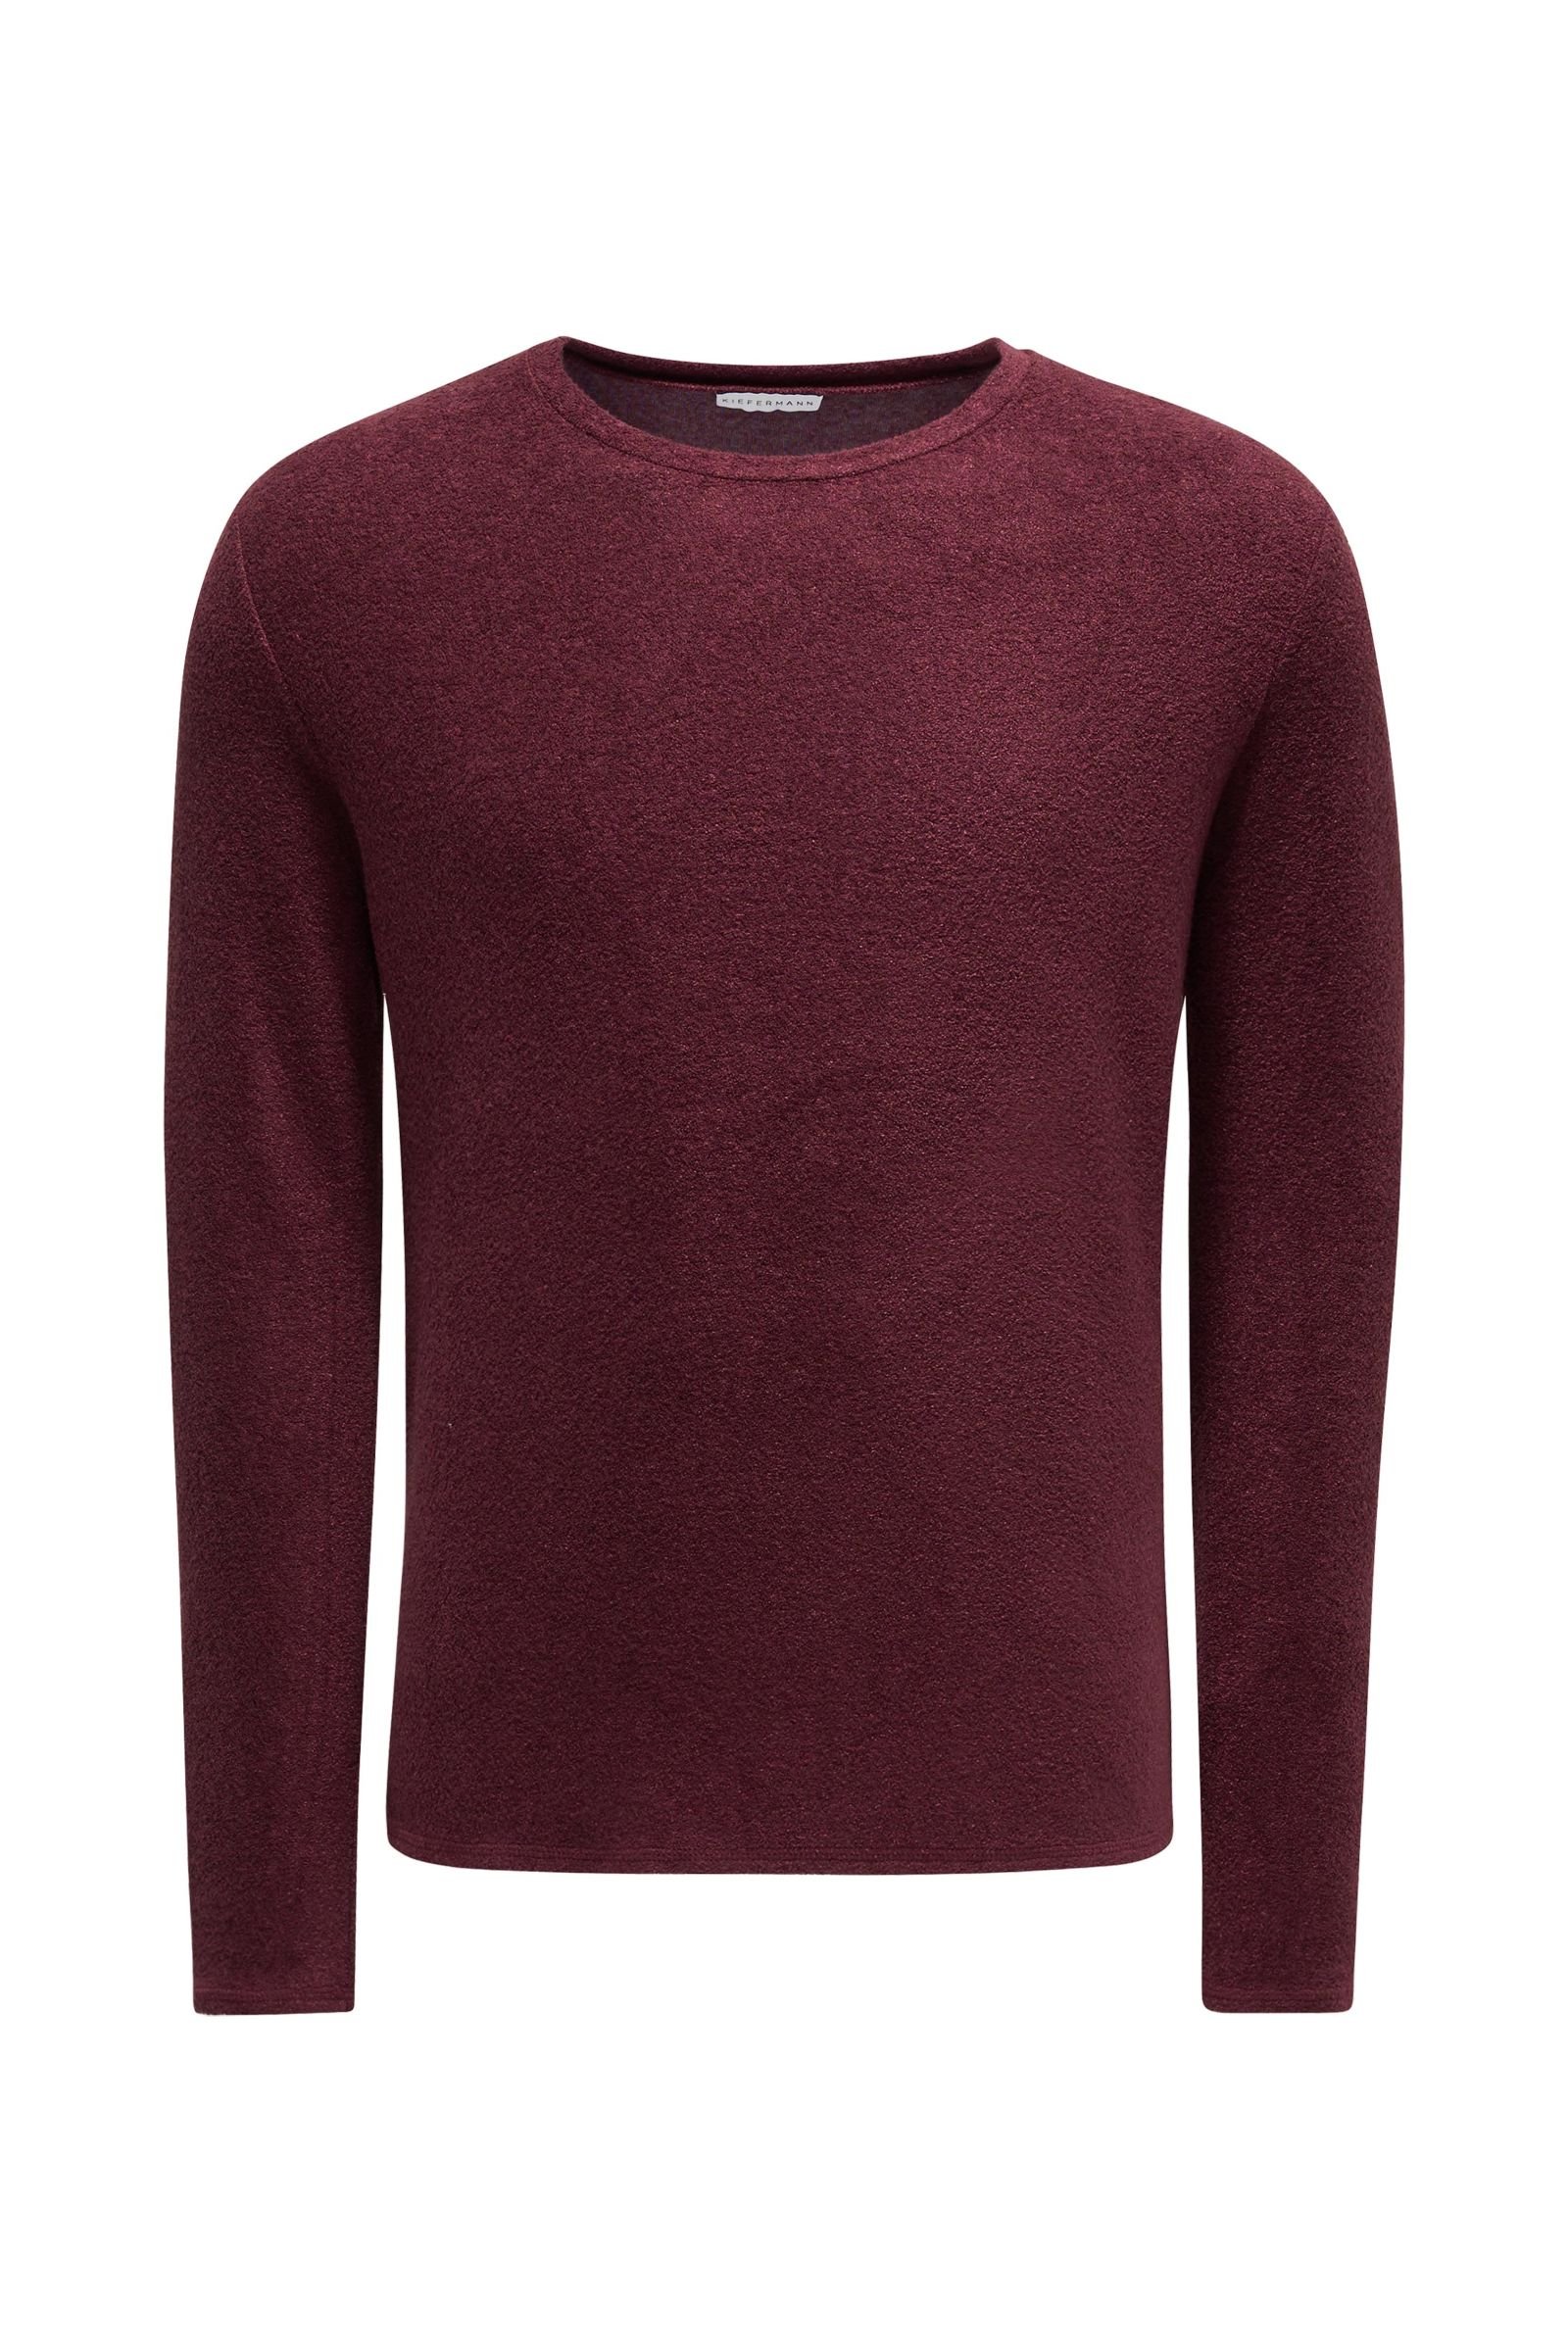 Terry fabric crew neck sweatshirt 'Veit' burgundy